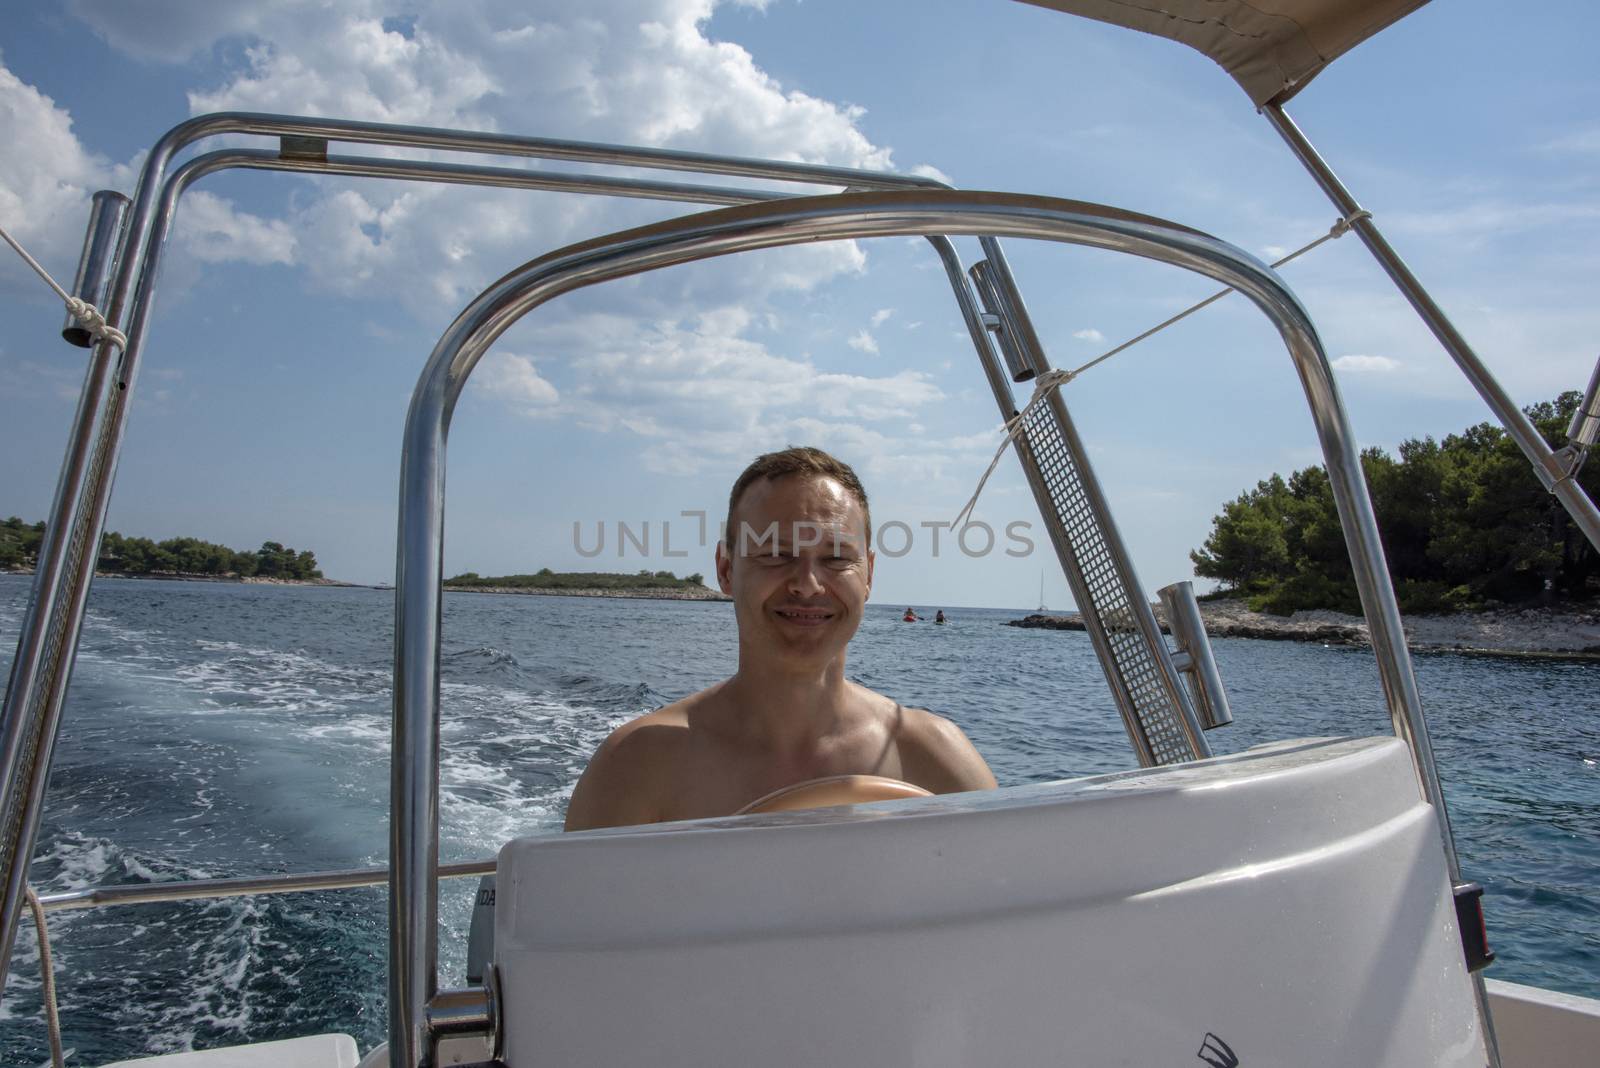 Croatia, Hvar - June 2018: Caucasian man, mid 40's drives a small boat on vacation